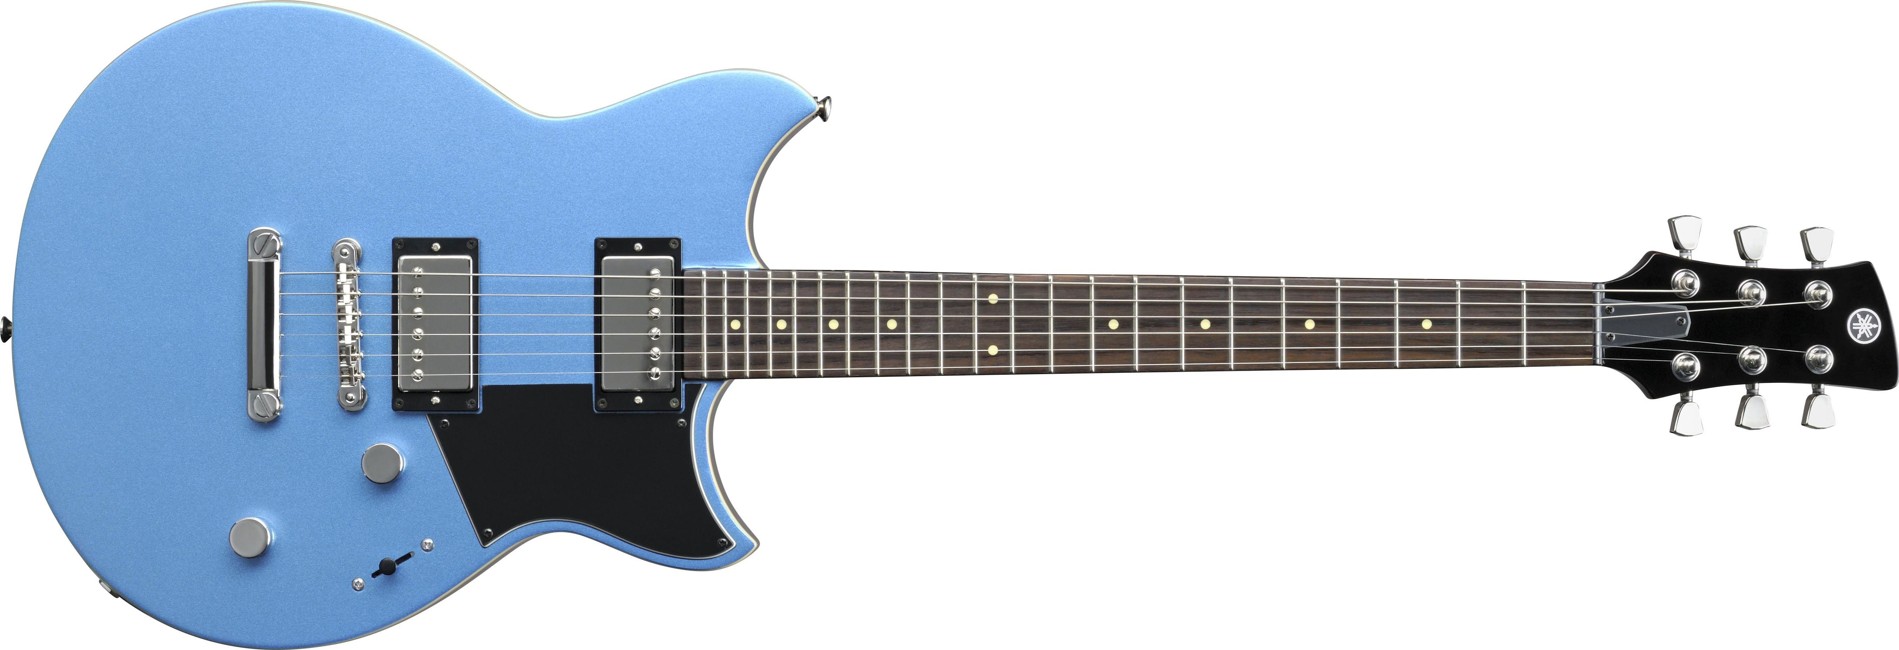 Yamaha - Revstar RS420 - Elektrisk Guitar (Factory Blue)